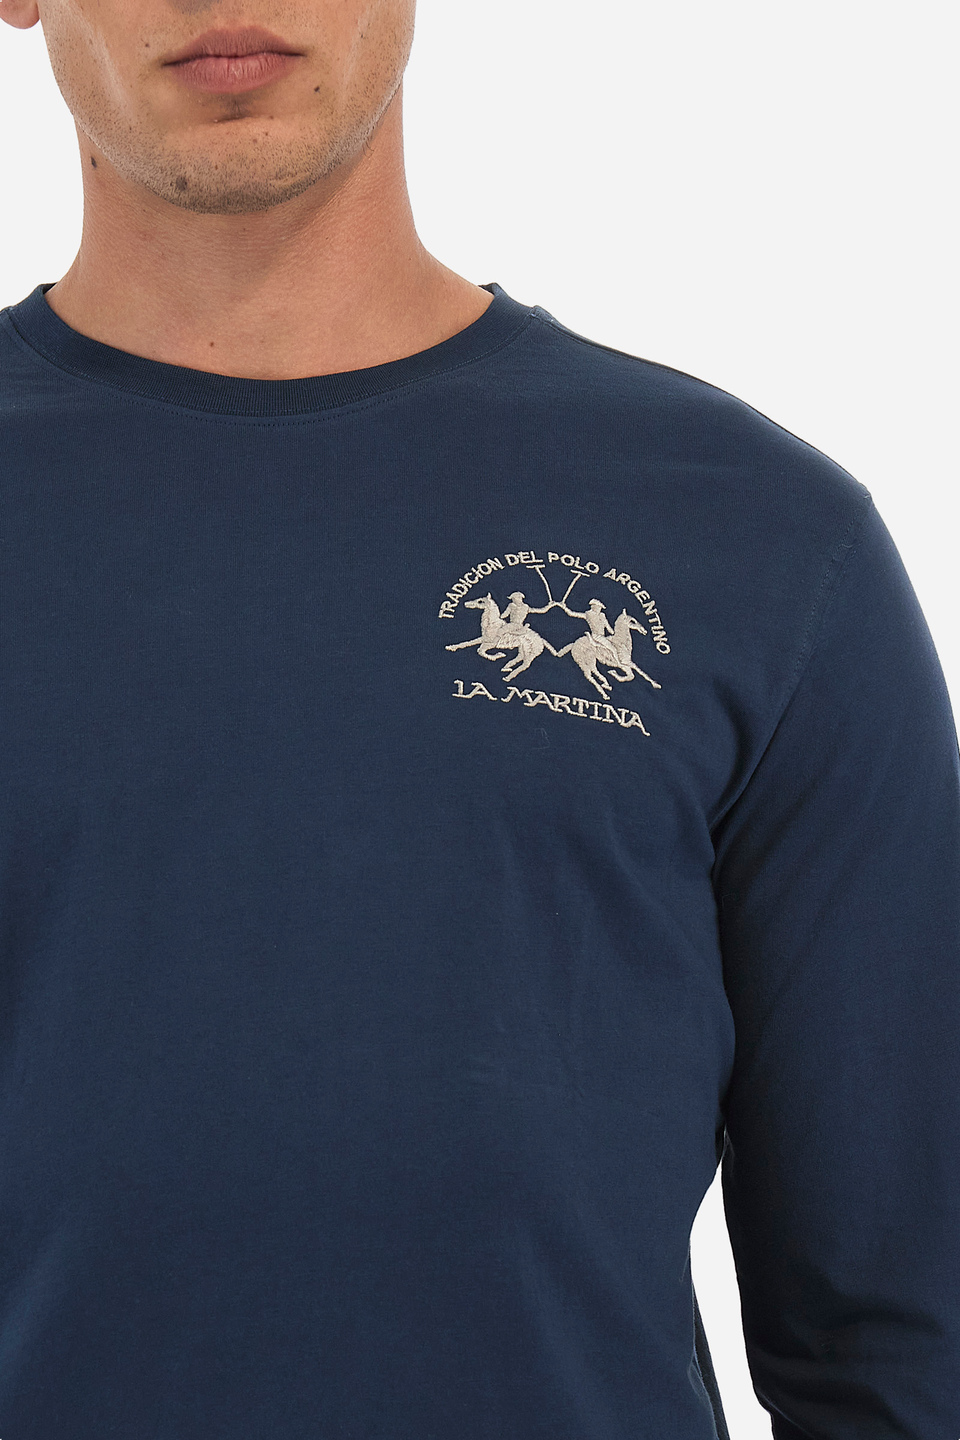 Tee-shirt homme coupe classique - Willey | La Martina - Official Online Shop